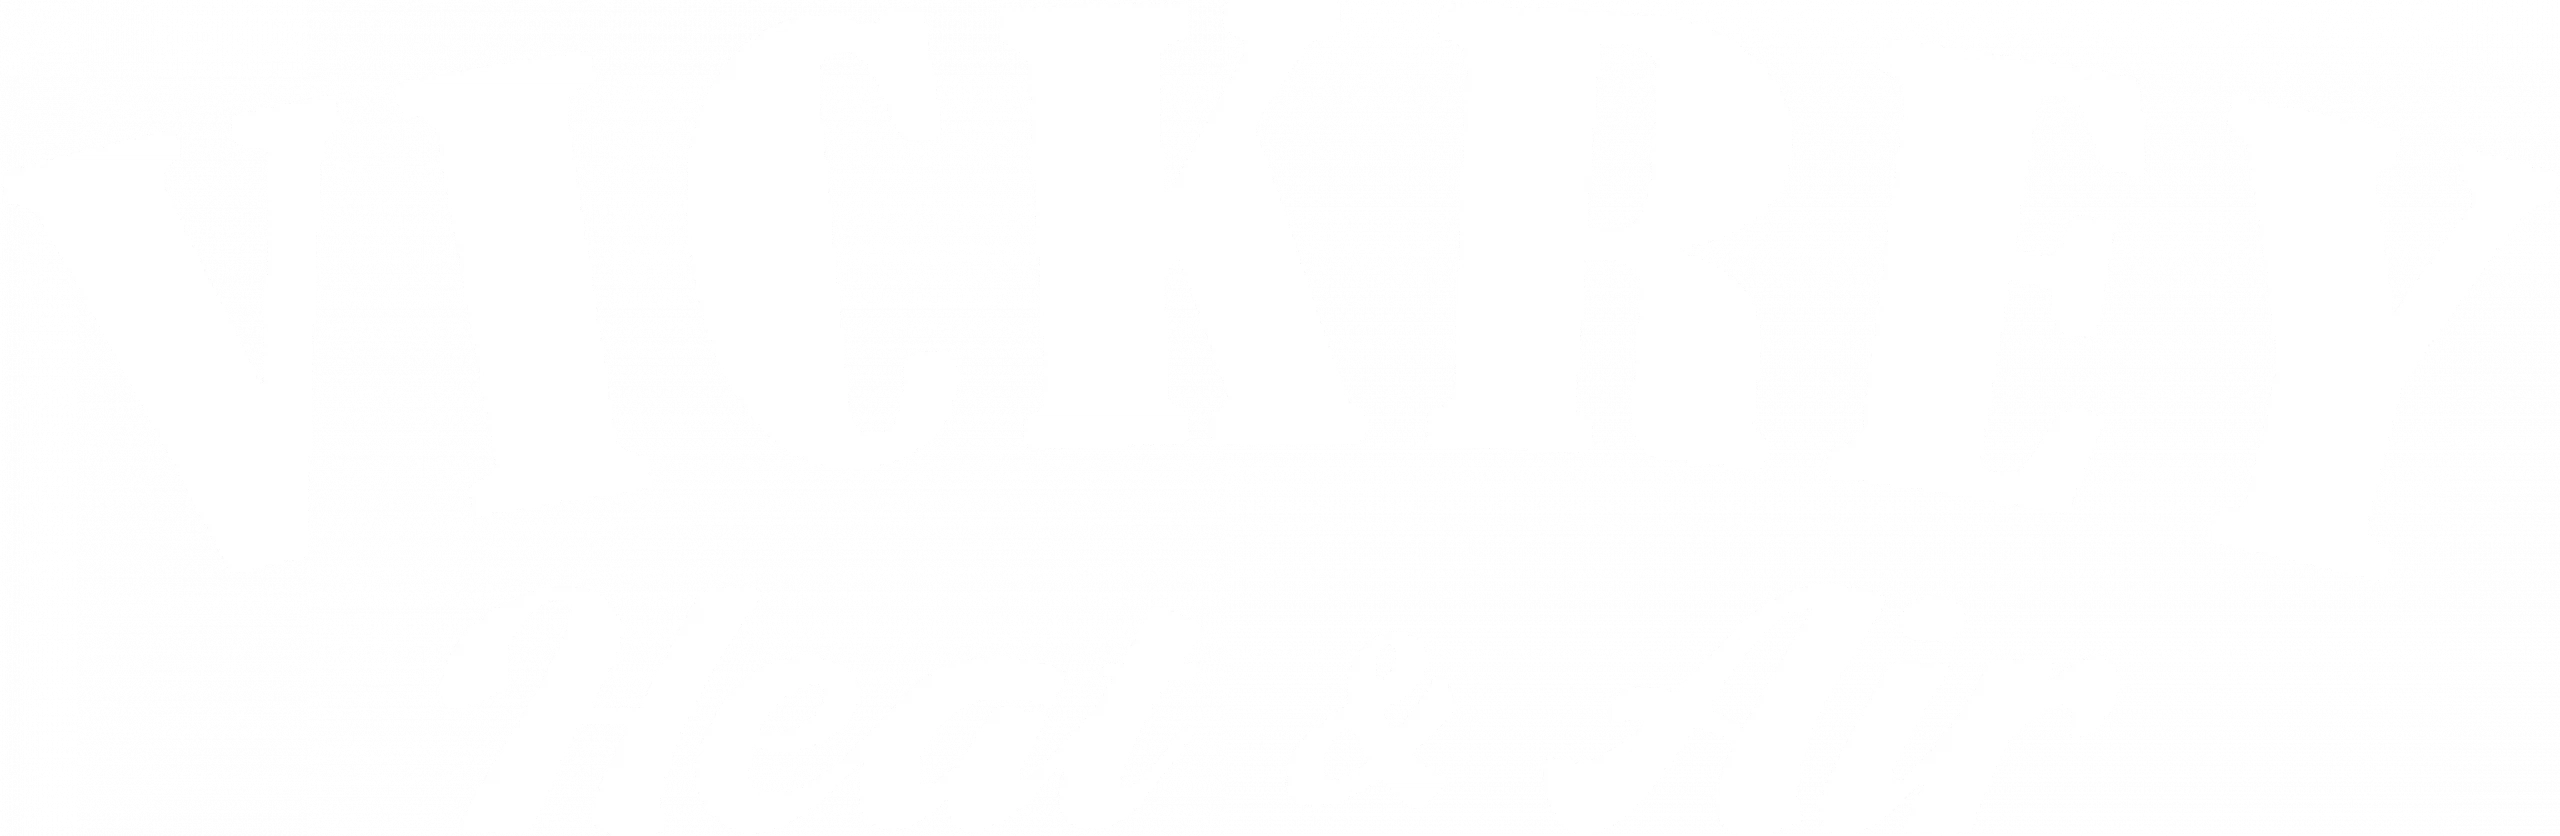 Vickrey Heat and Air Inc. Logo